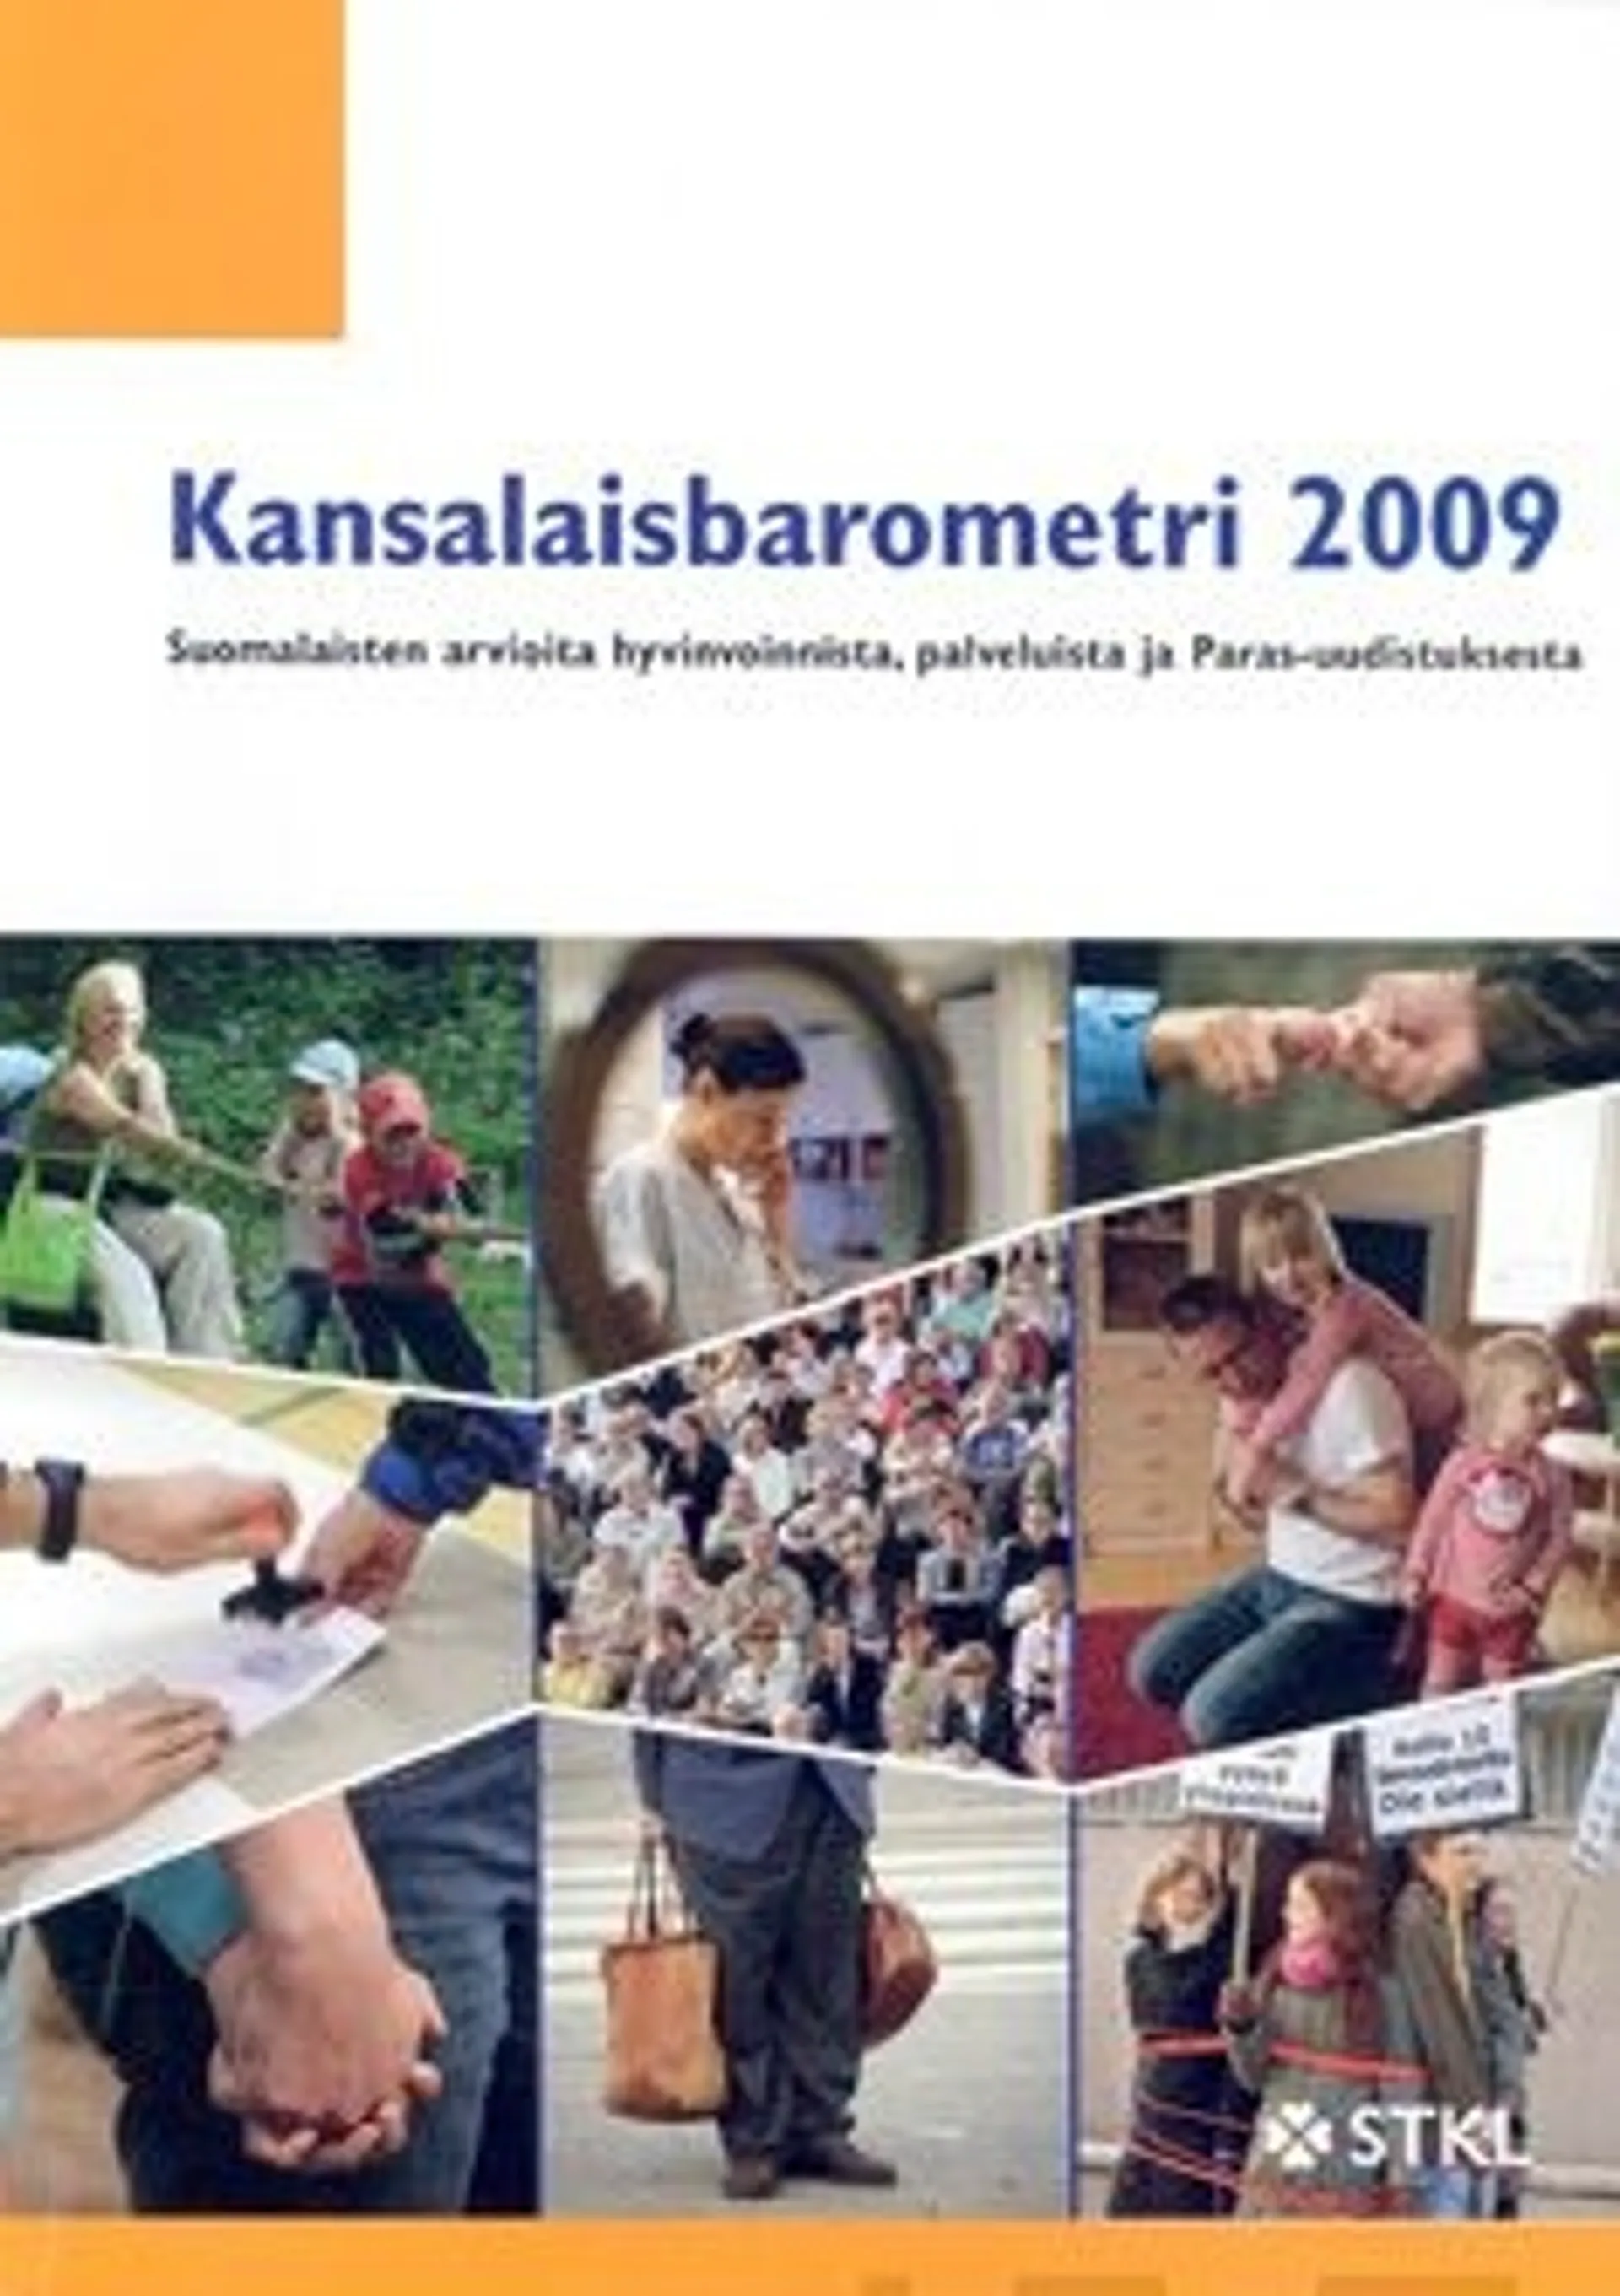 Siltaniemi, Kansalaisbarometri 2009